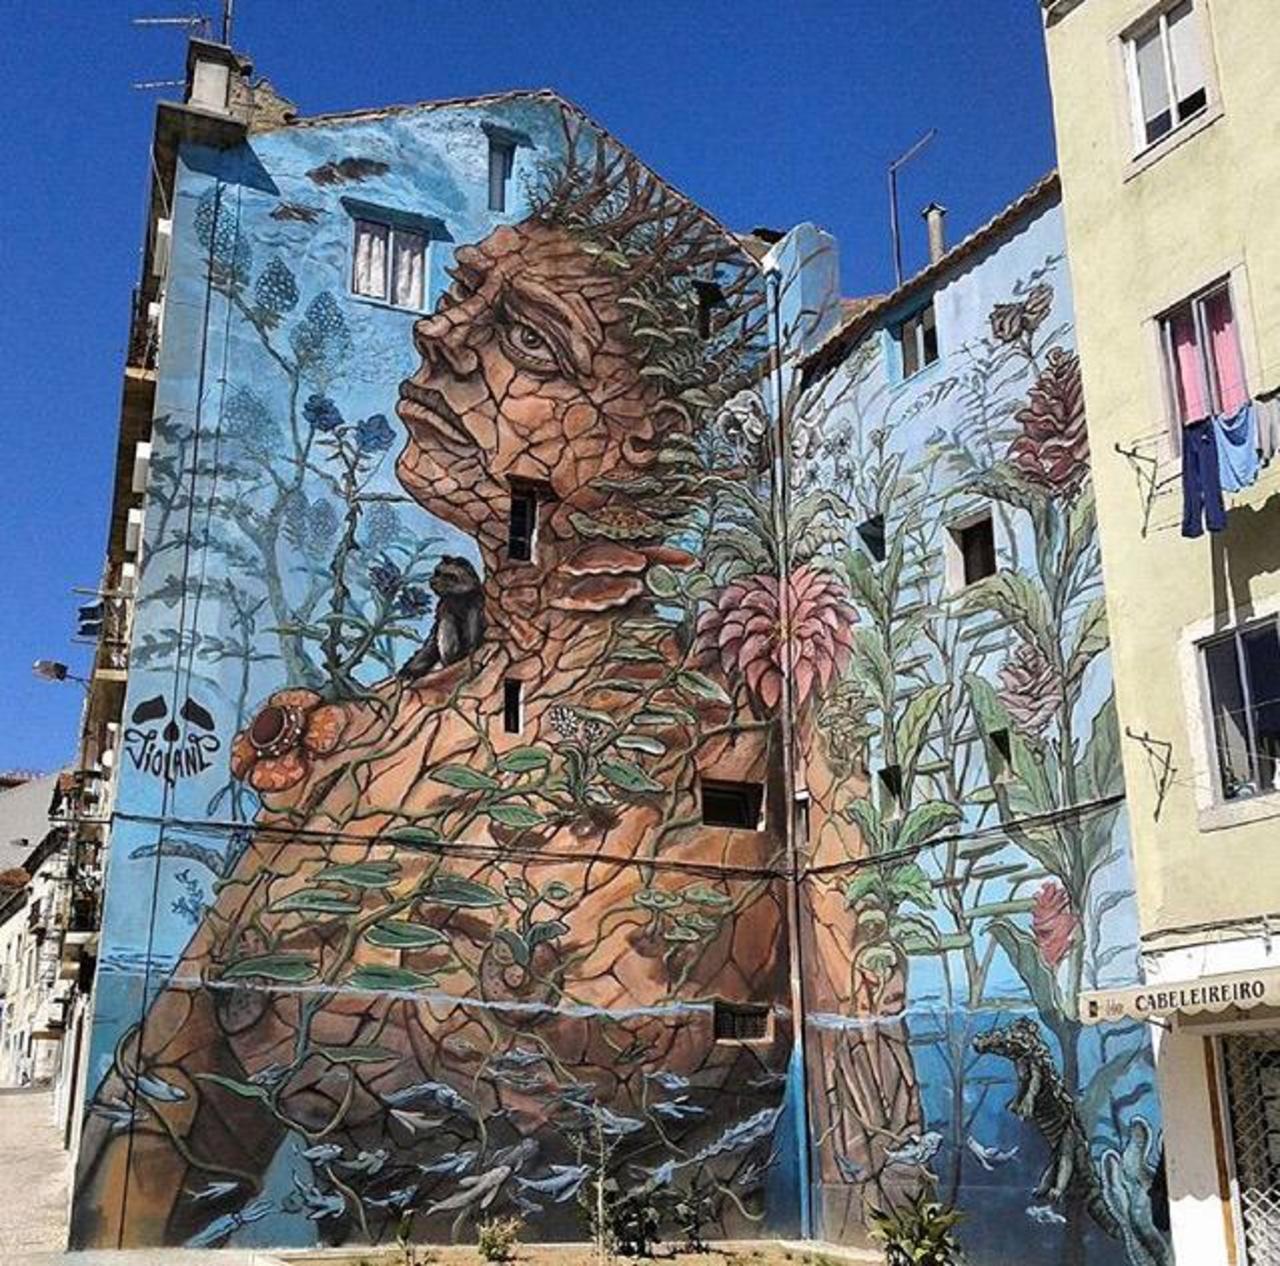 RT @mzajaeh: Street Art by Violant 

#art #graffiti #mural #streetart http://t.co/awgjVnDyMz